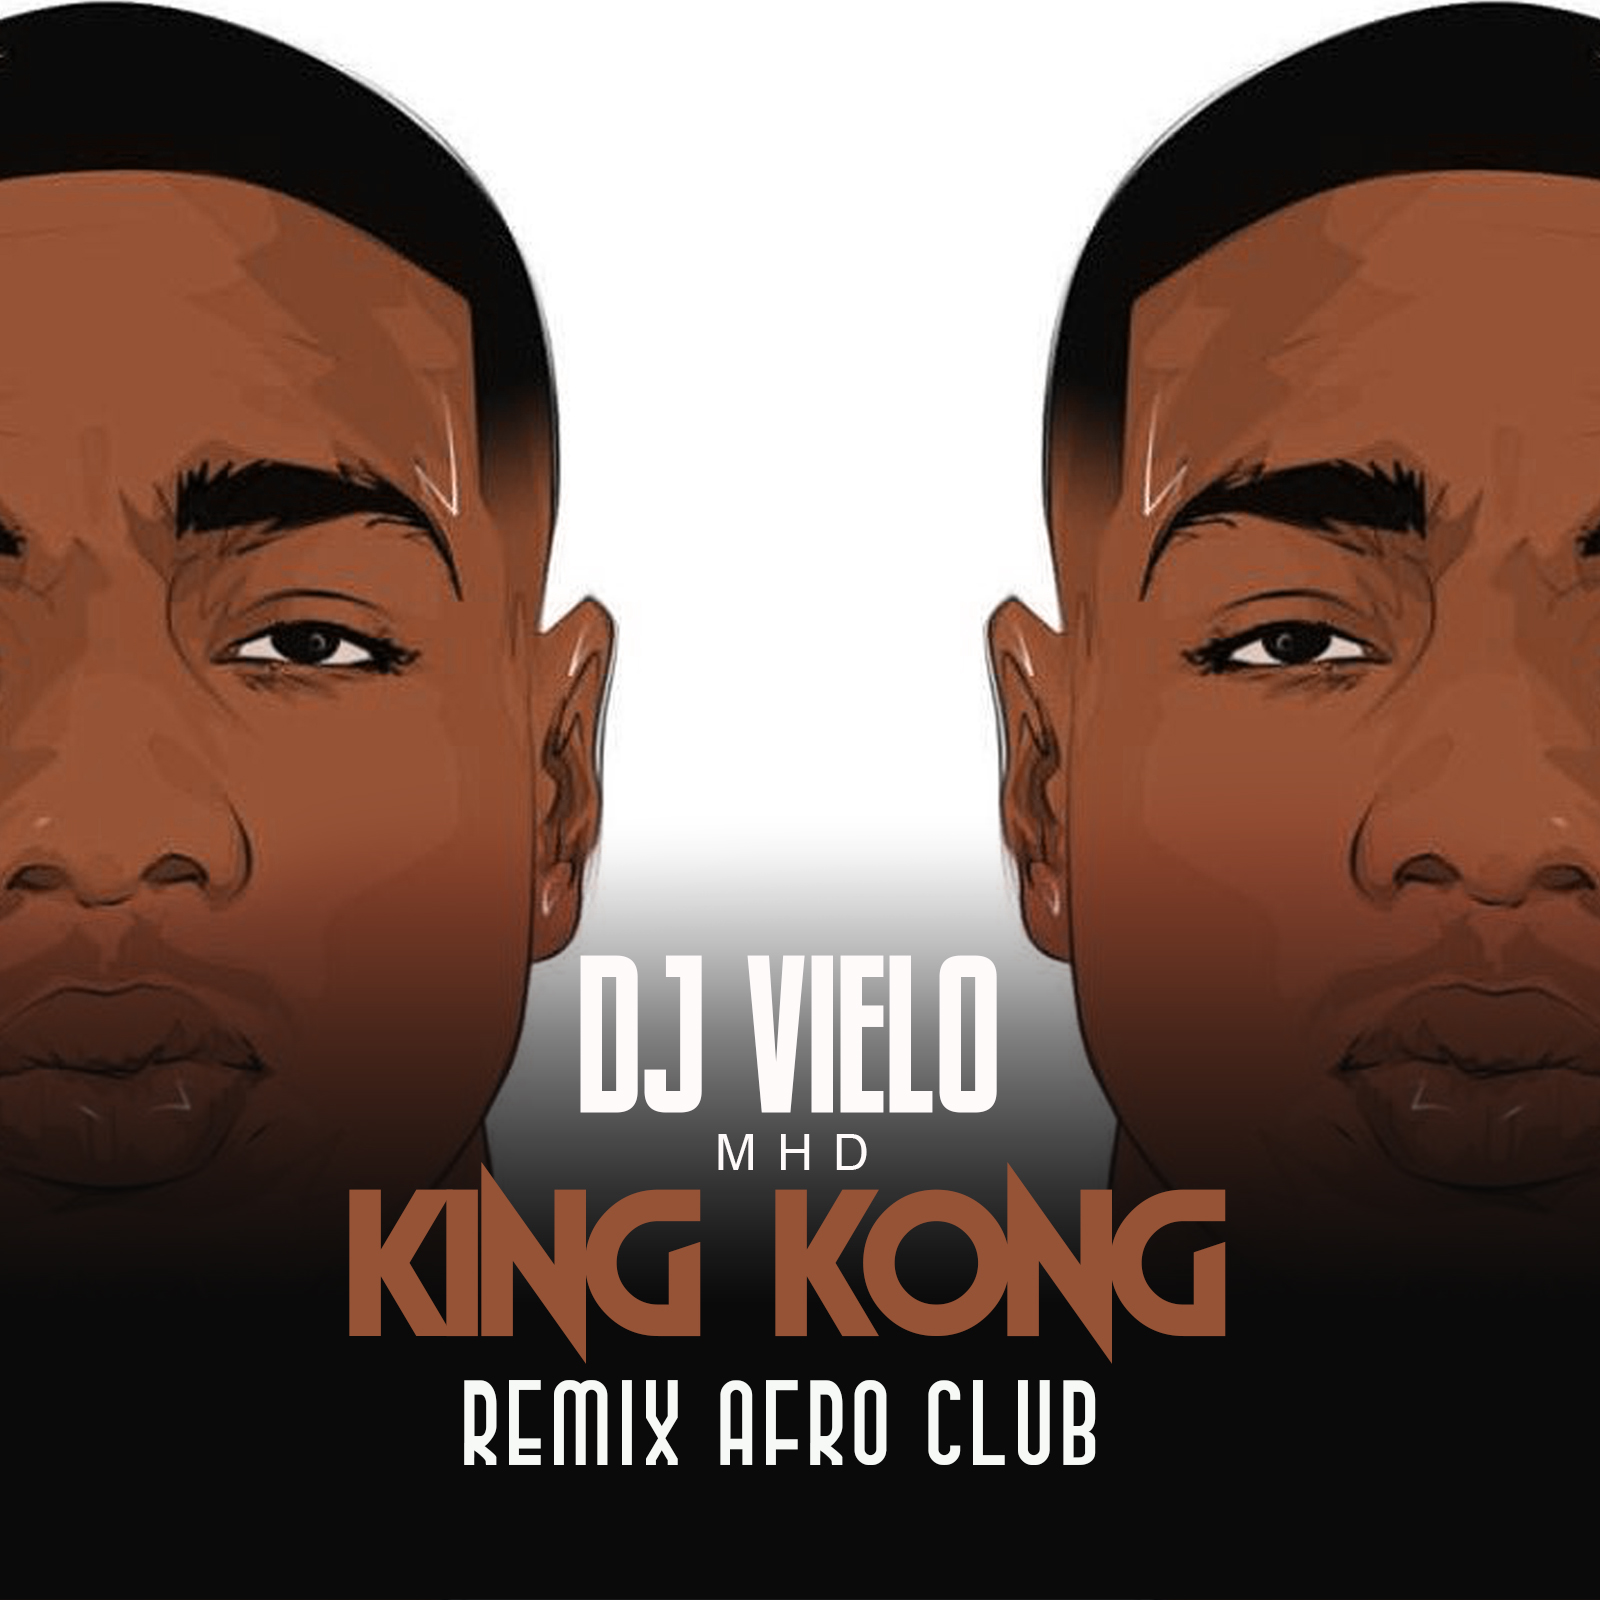 Herunterladen Dj Vielo X MHD - AFRO TRAP Part.11 (King Kong) Remix Afro Club DISPO SUR SPOTIFY, DEEZER, ITUNES